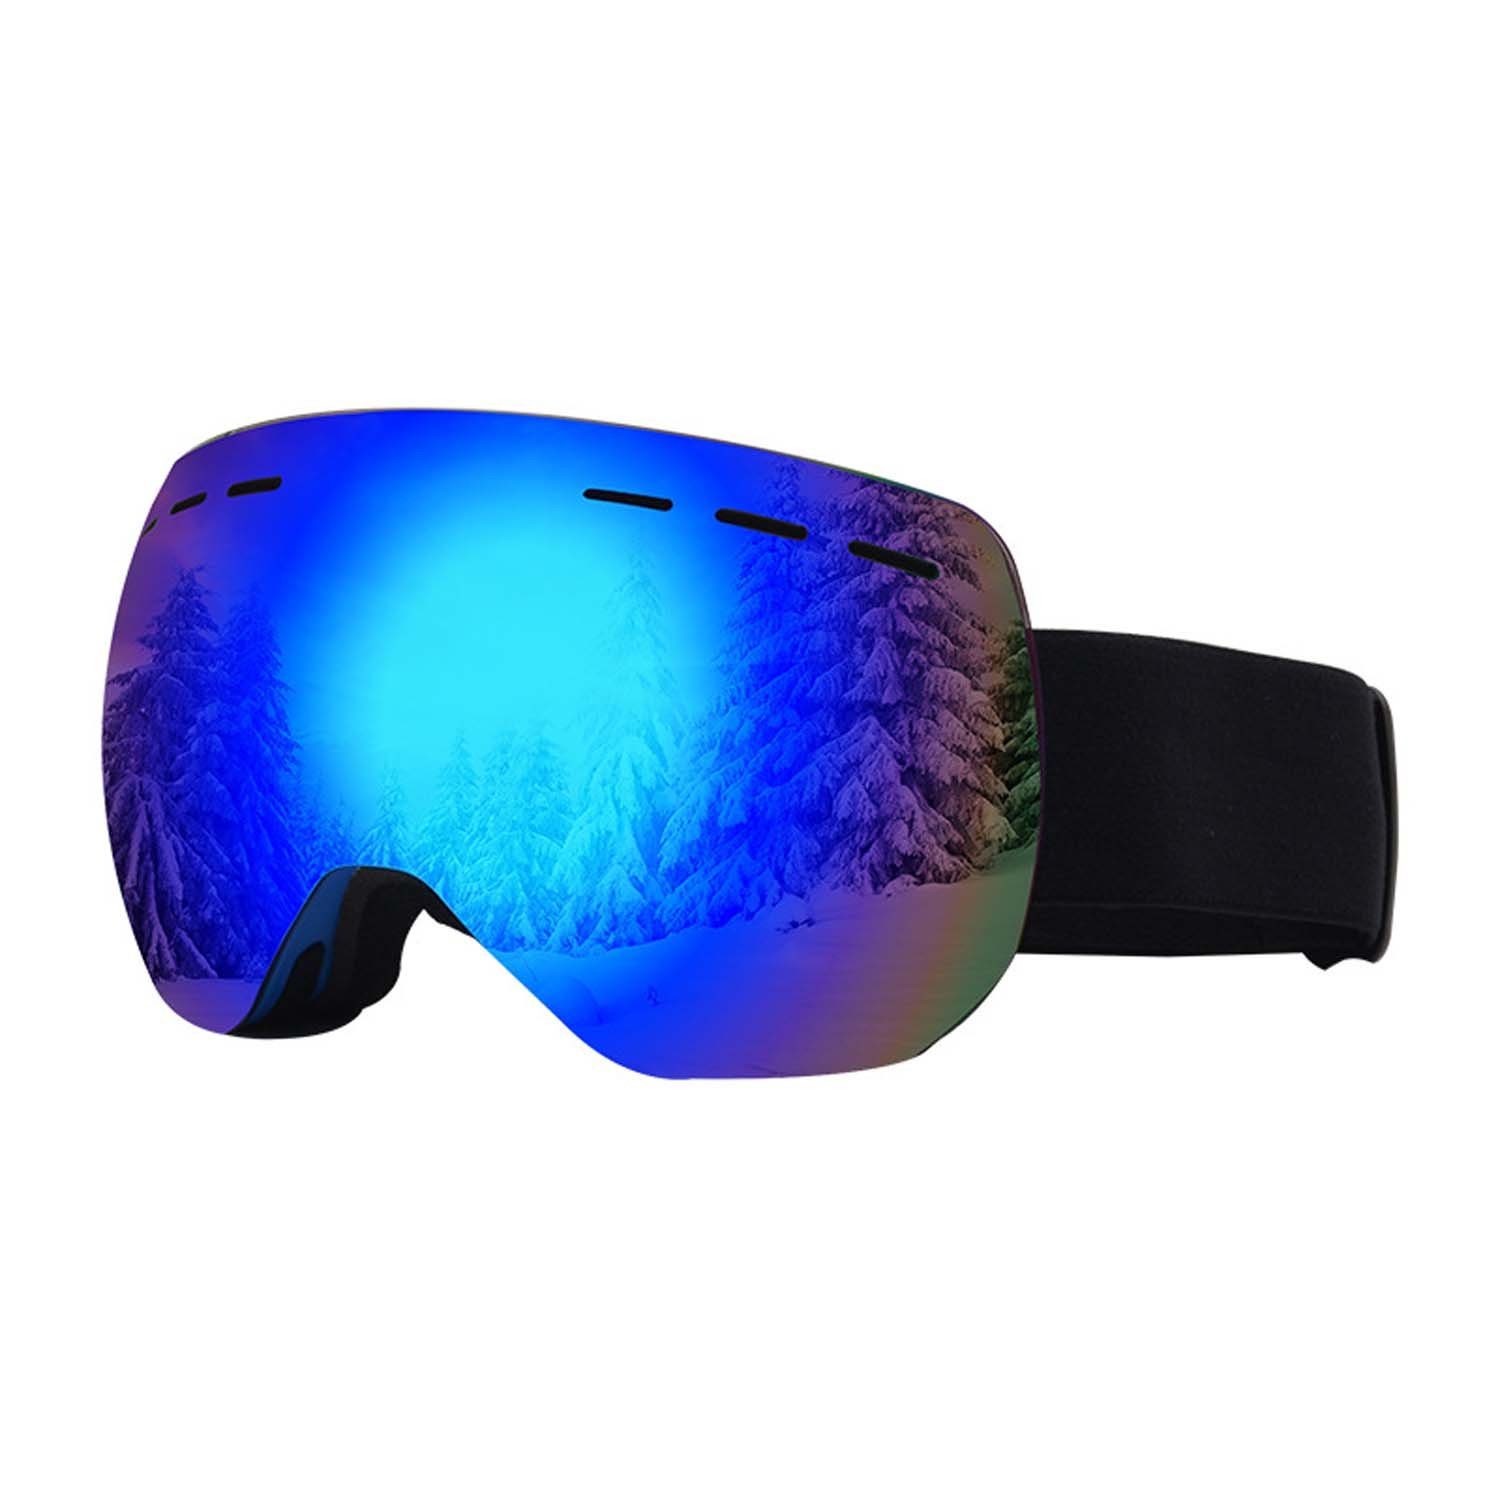 Novalinea Sportbrille Skibrille, doppellagige beschlagfreie große Kugelbrille, (1-St) Blau